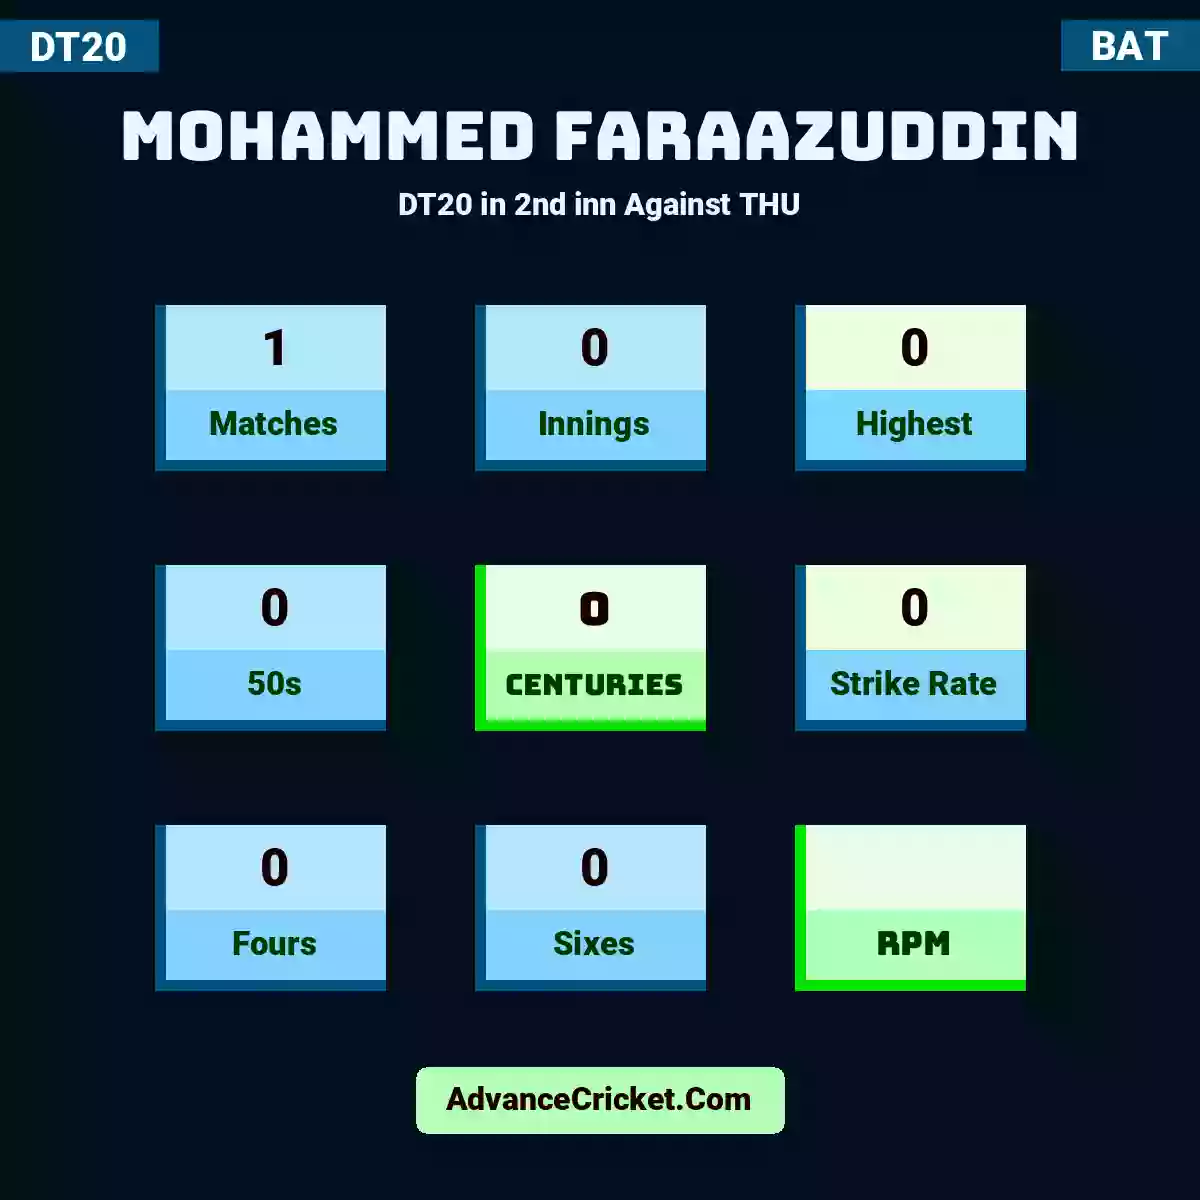 Mohammed Faraazuddin DT20  in 2nd inn Against THU, Mohammed Faraazuddin played 1 matches, scored 0 runs as highest, 0 half-centuries, and 0 centuries, with a strike rate of 0. M.Faraazuddin hit 0 fours and 0 sixes.